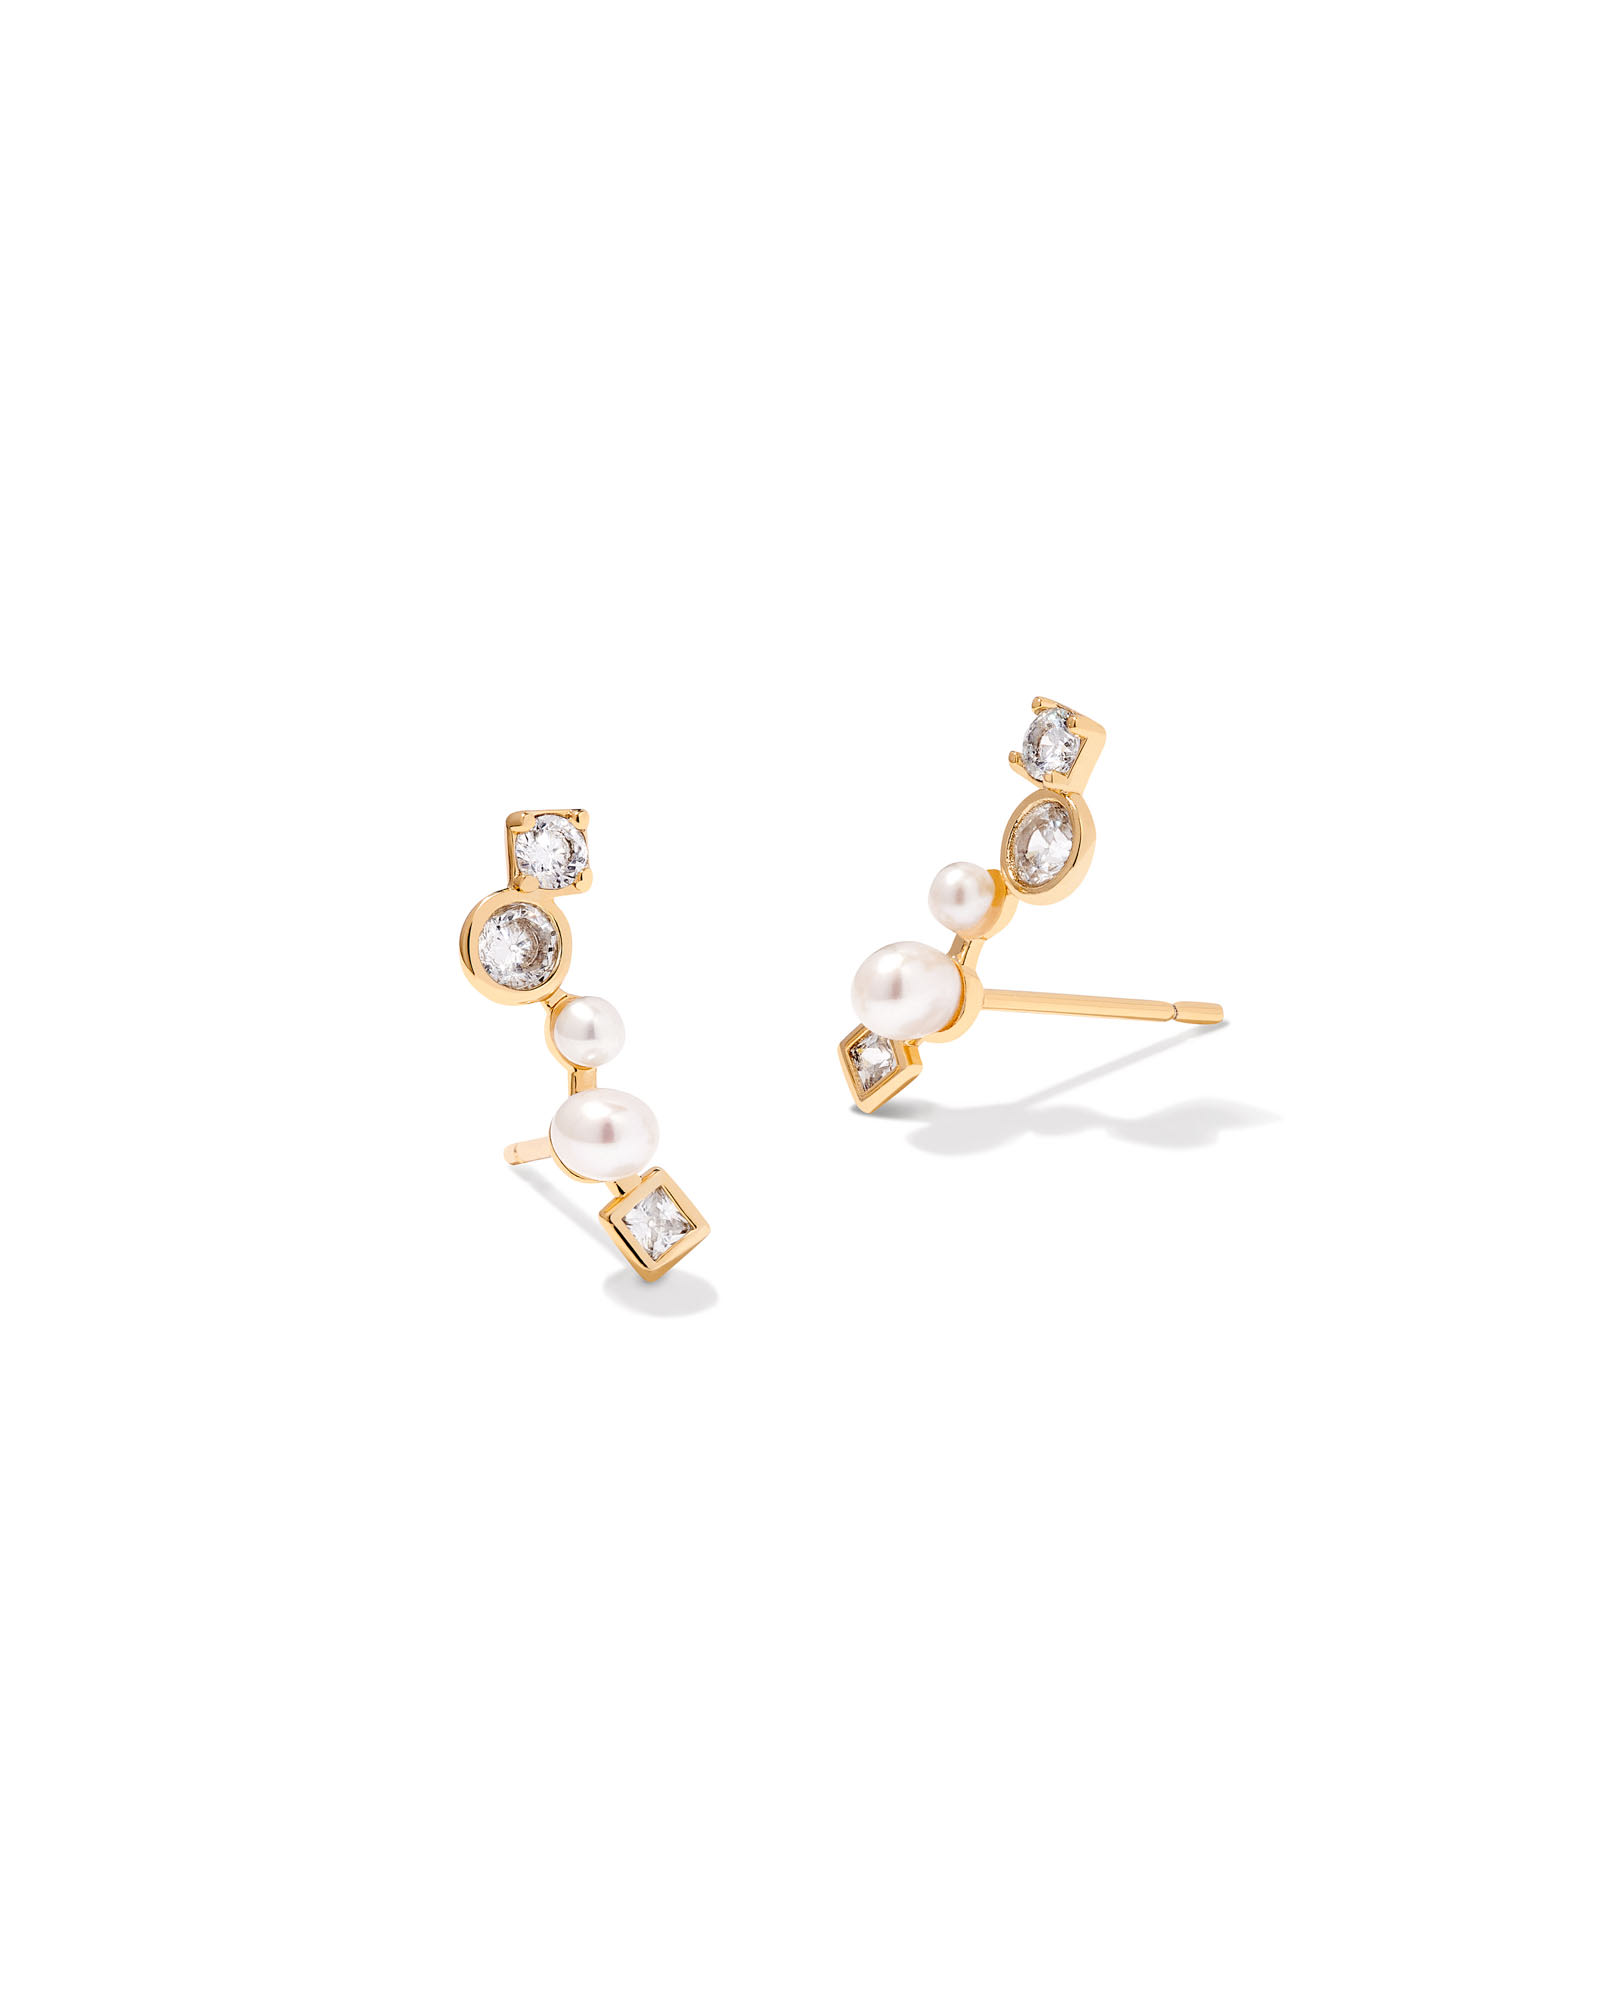 Kendra Scott Leighton Gold Ear Climber Earrings in White | Pearl